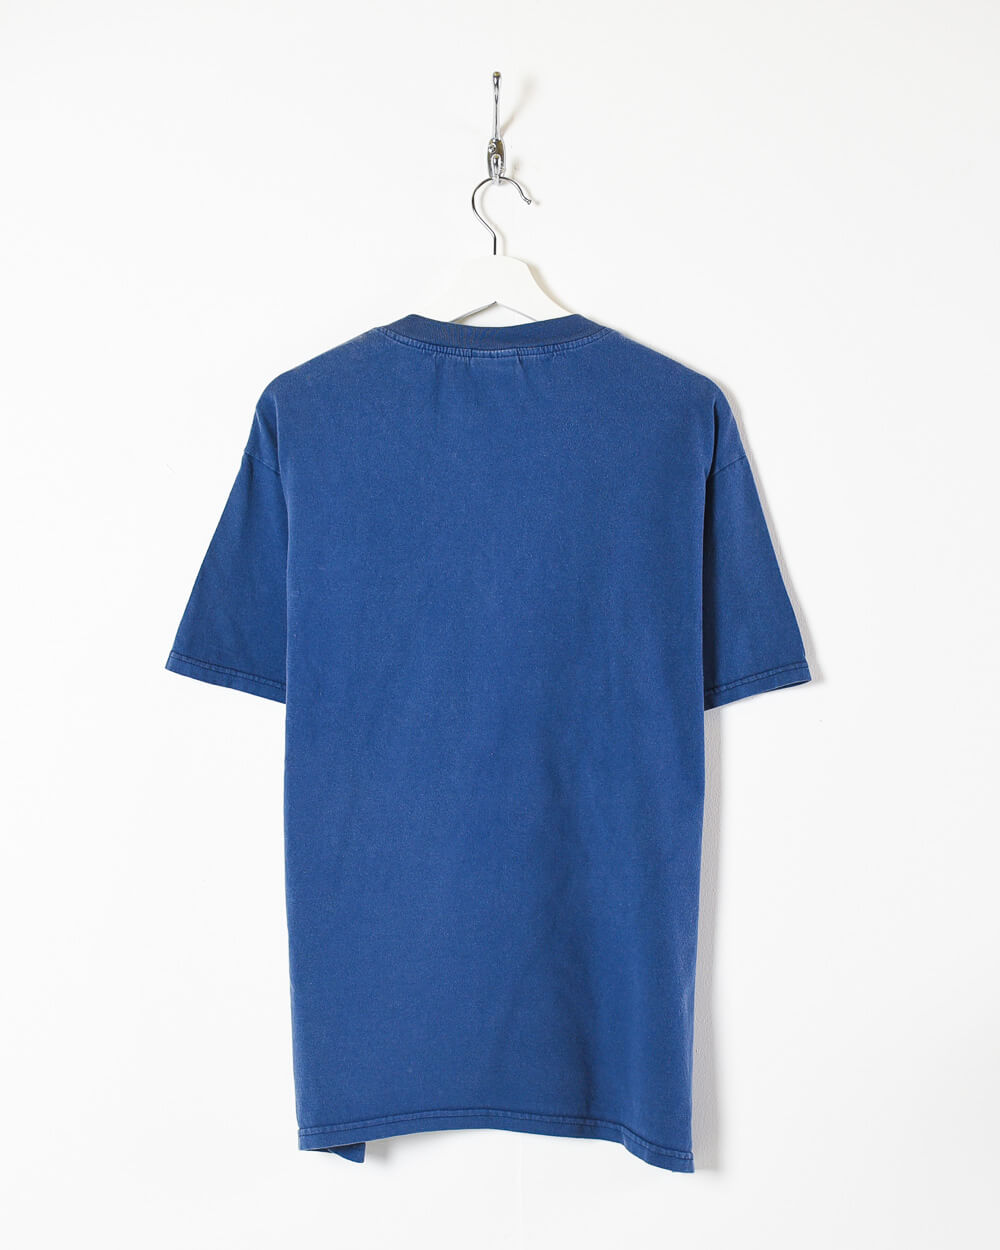 Blue Lee Blues NHL T-Shirt - Medium